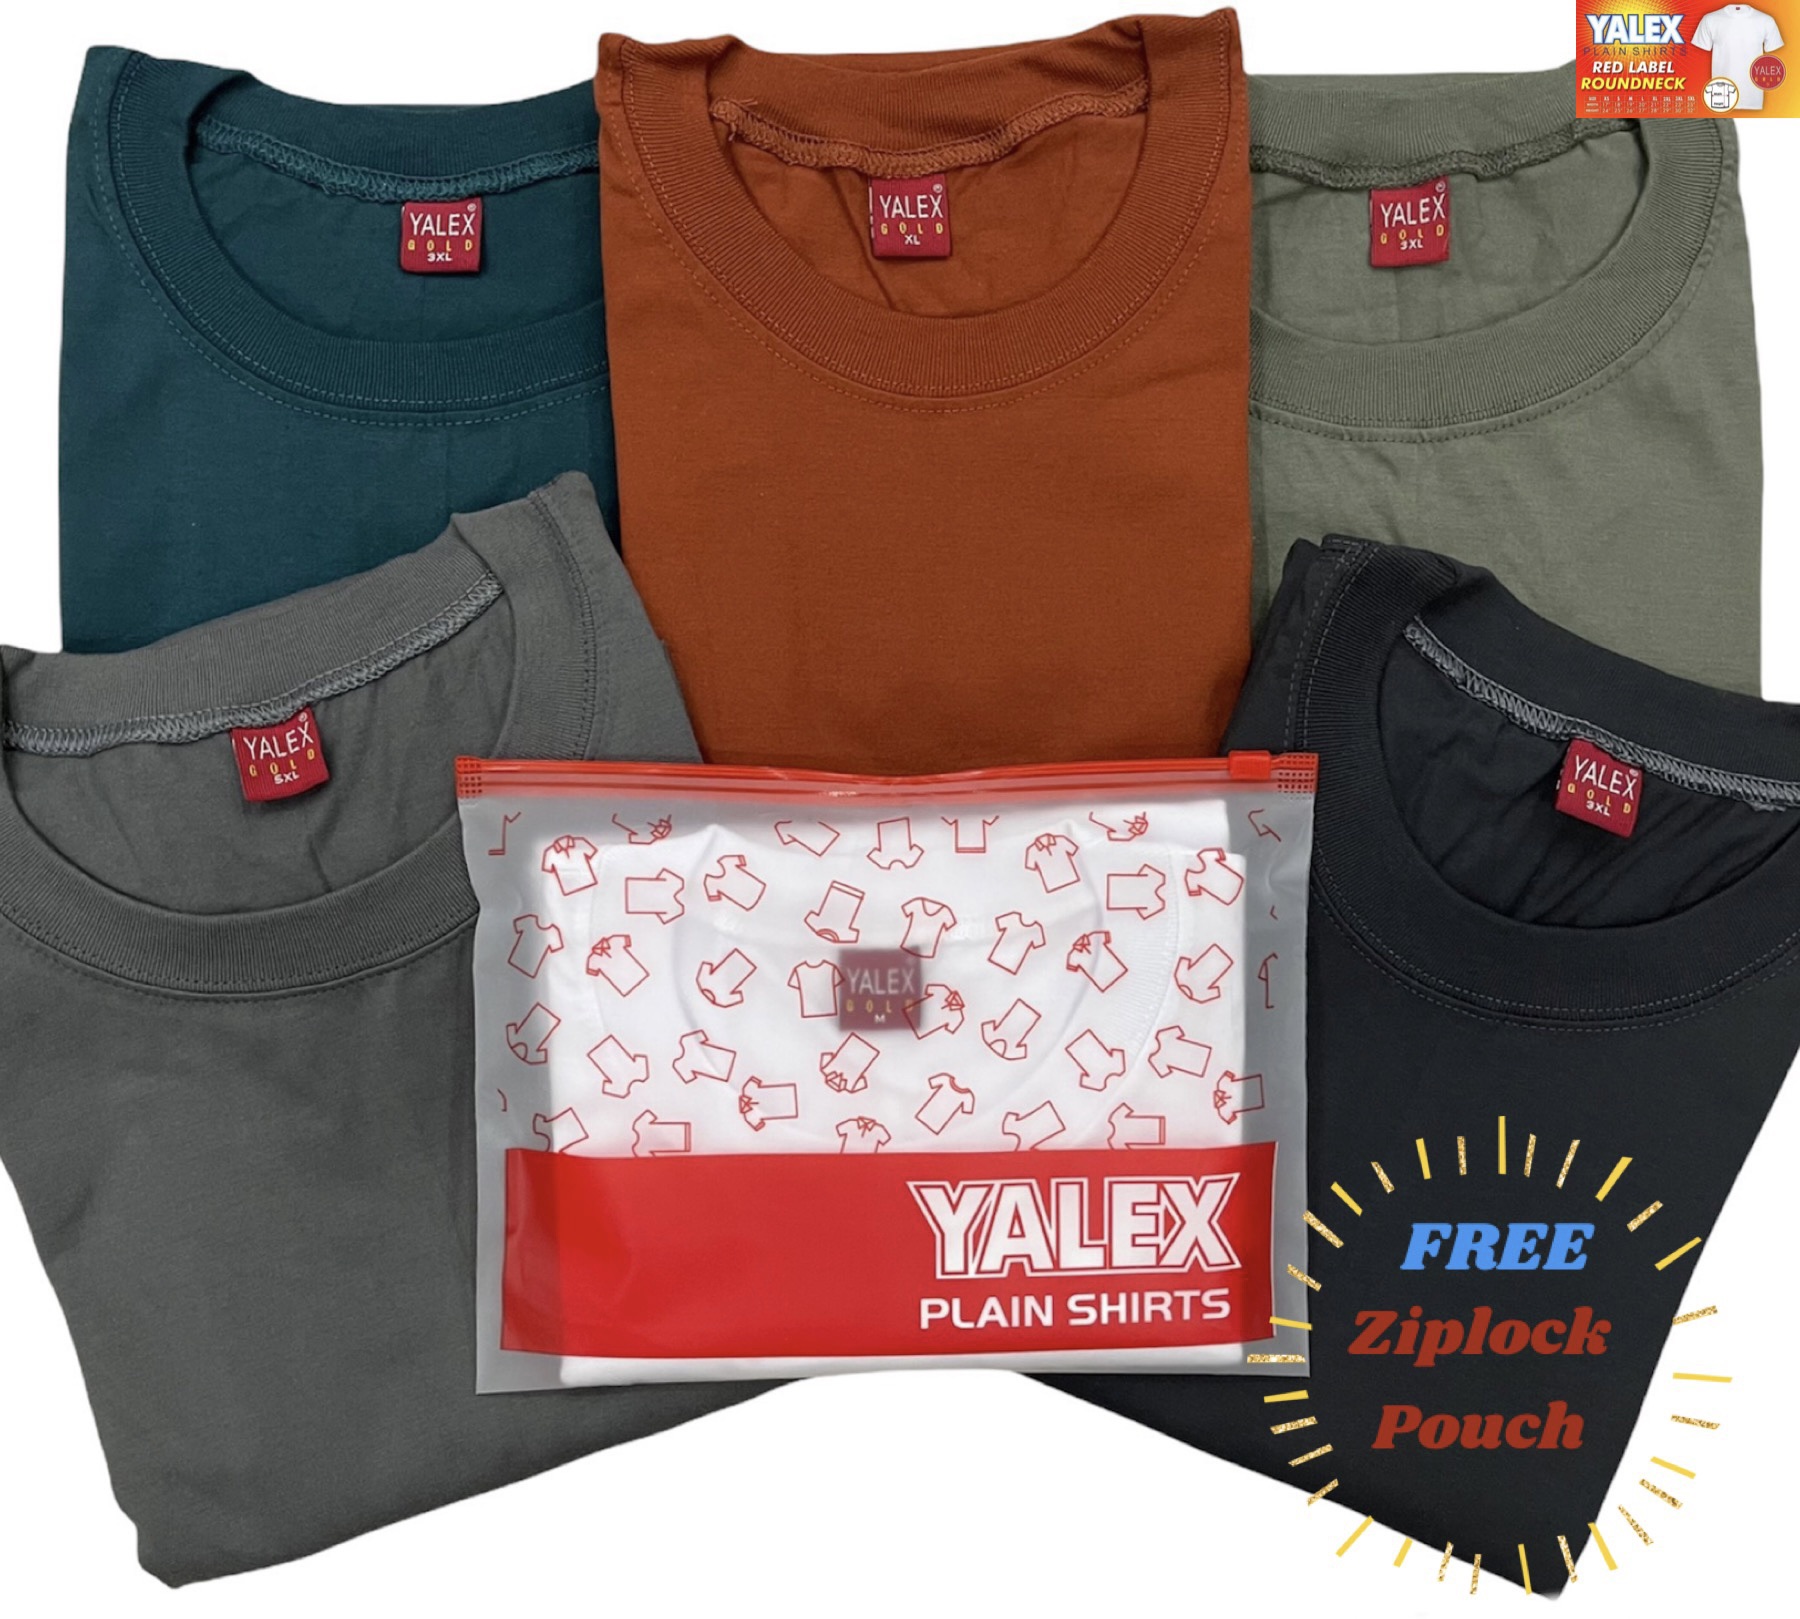 Yalex Red Label Unisex Plain Shirts - Special Colors